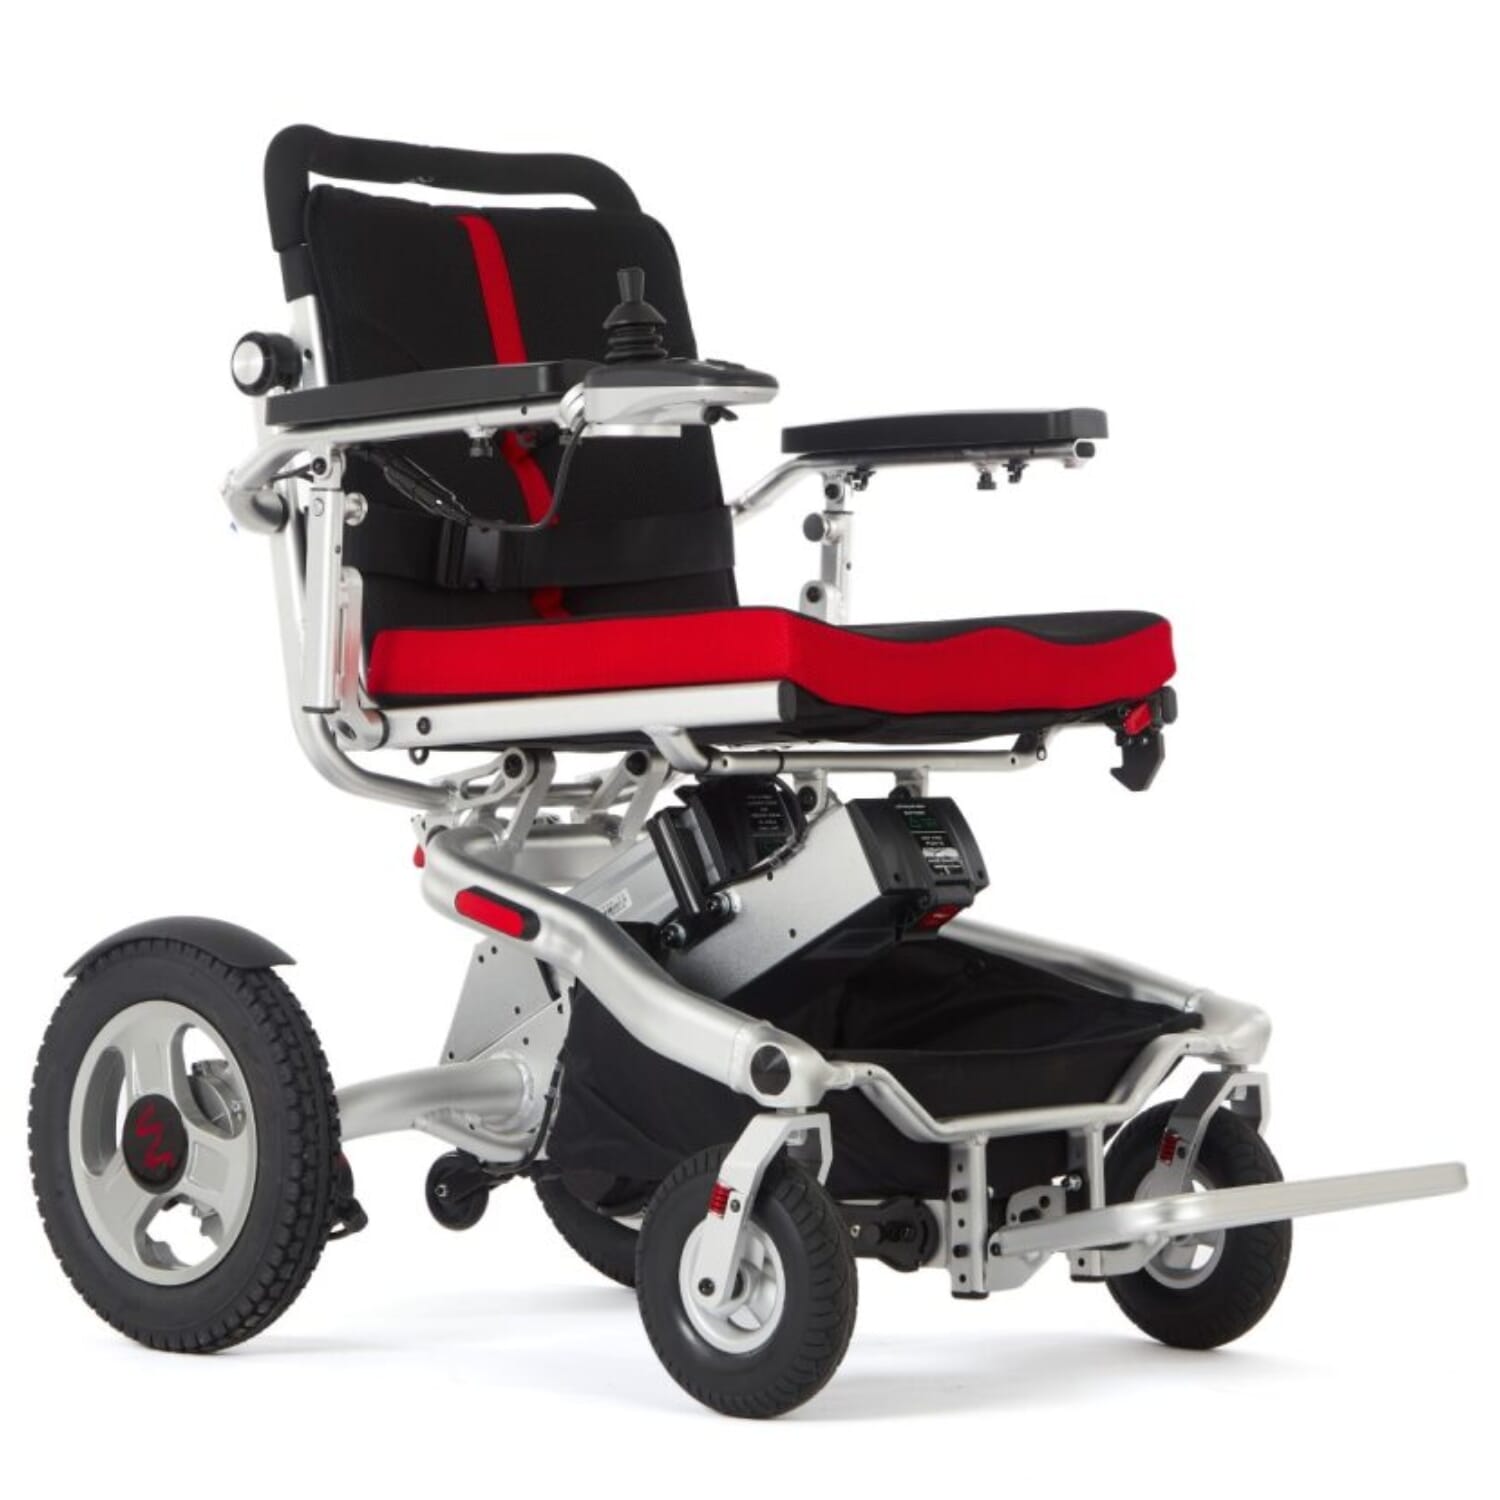 View Aerolite Trekker Folding Electric Wheelchair information